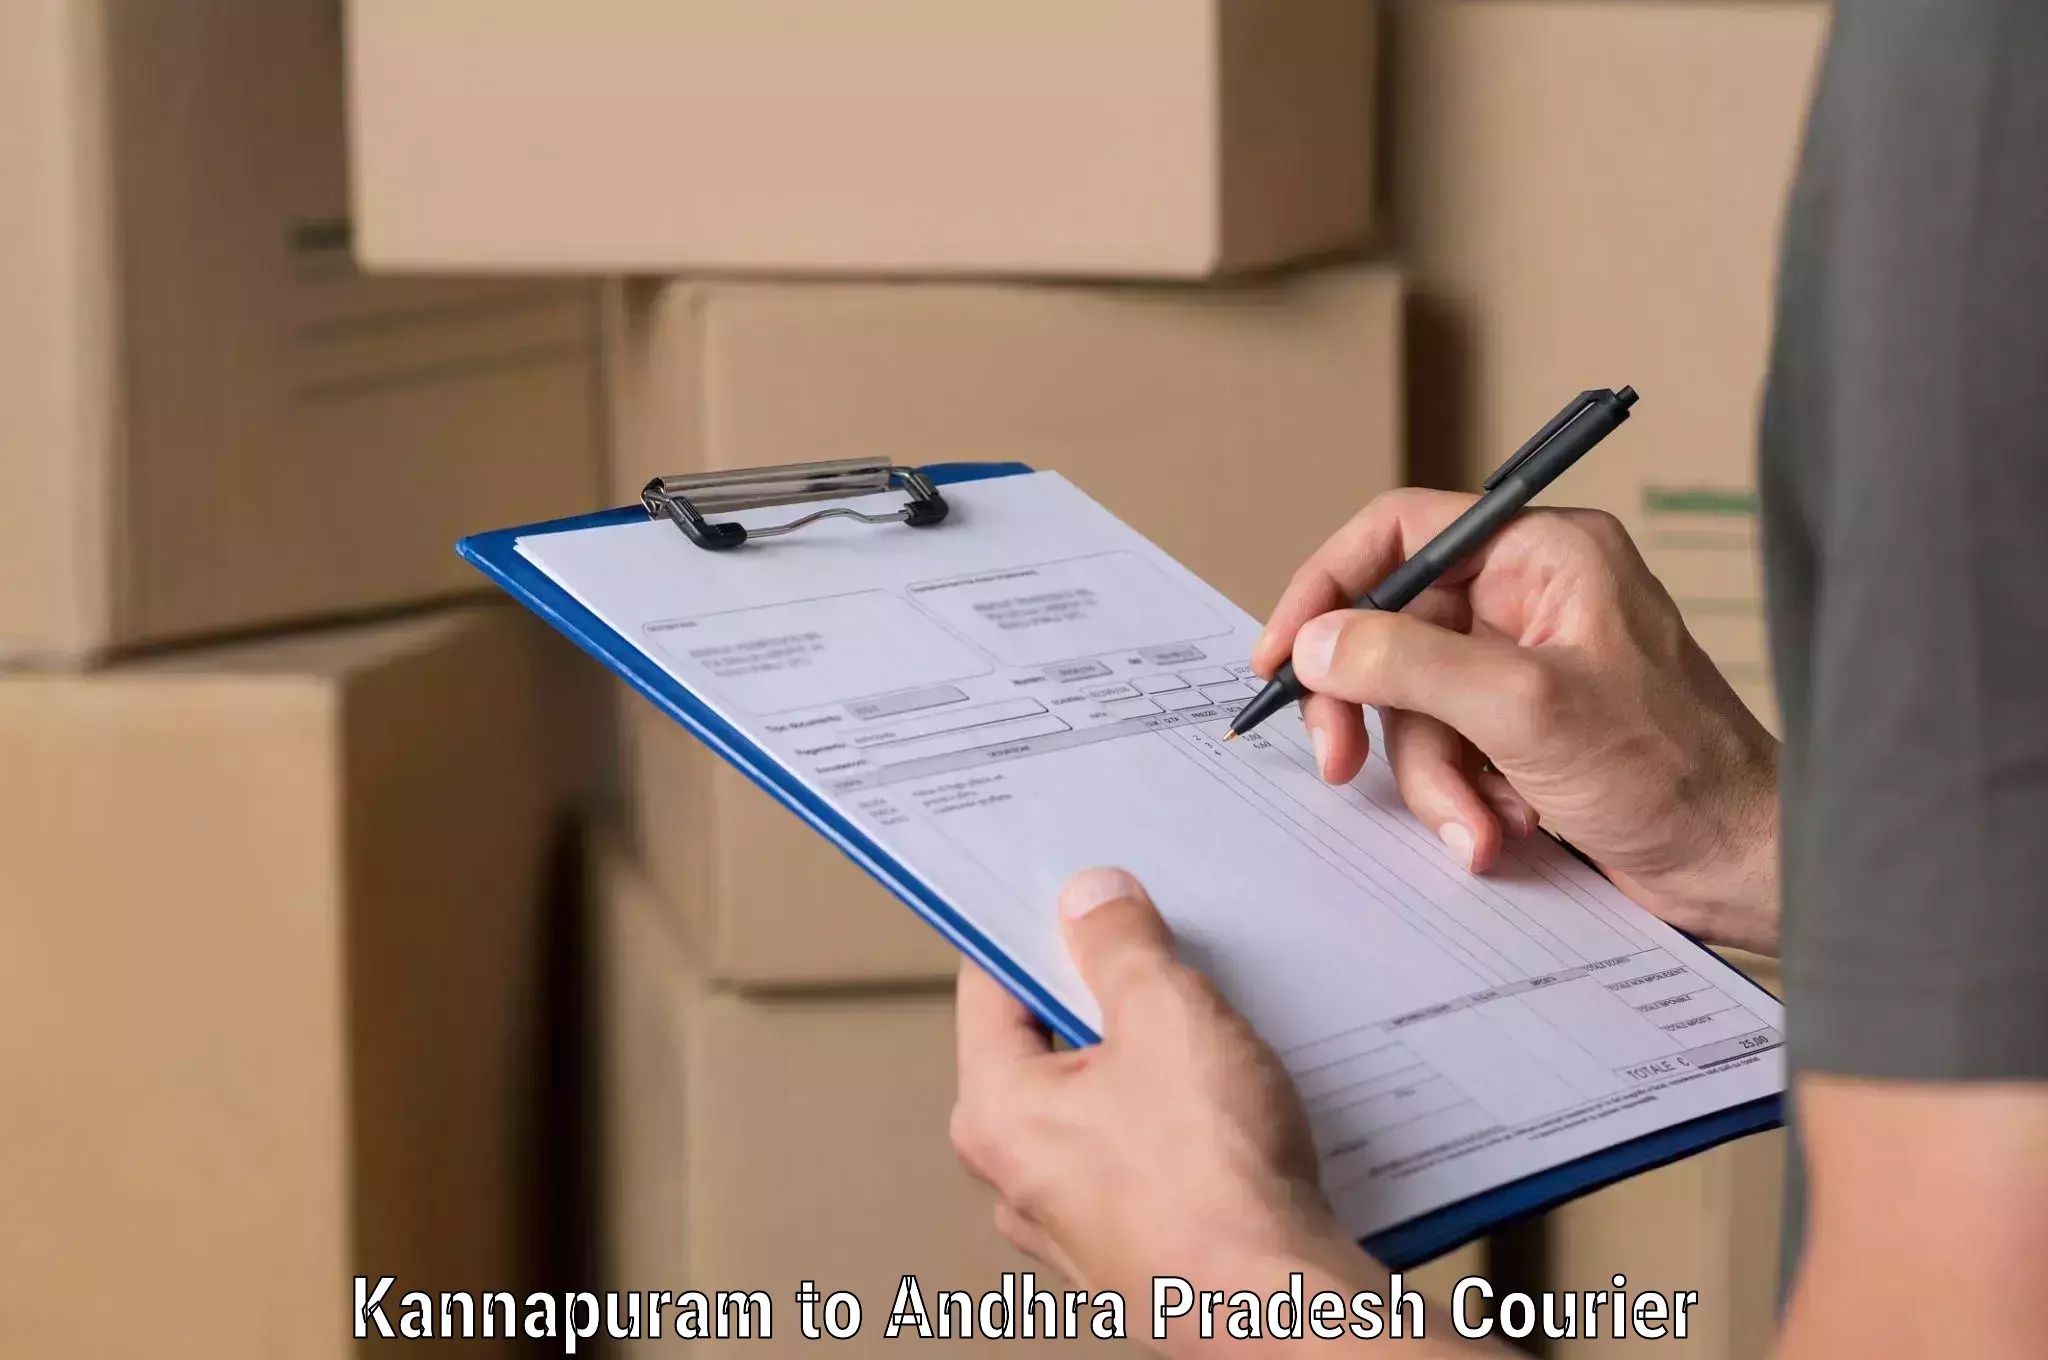 Customizable delivery plans Kannapuram to Bapatla